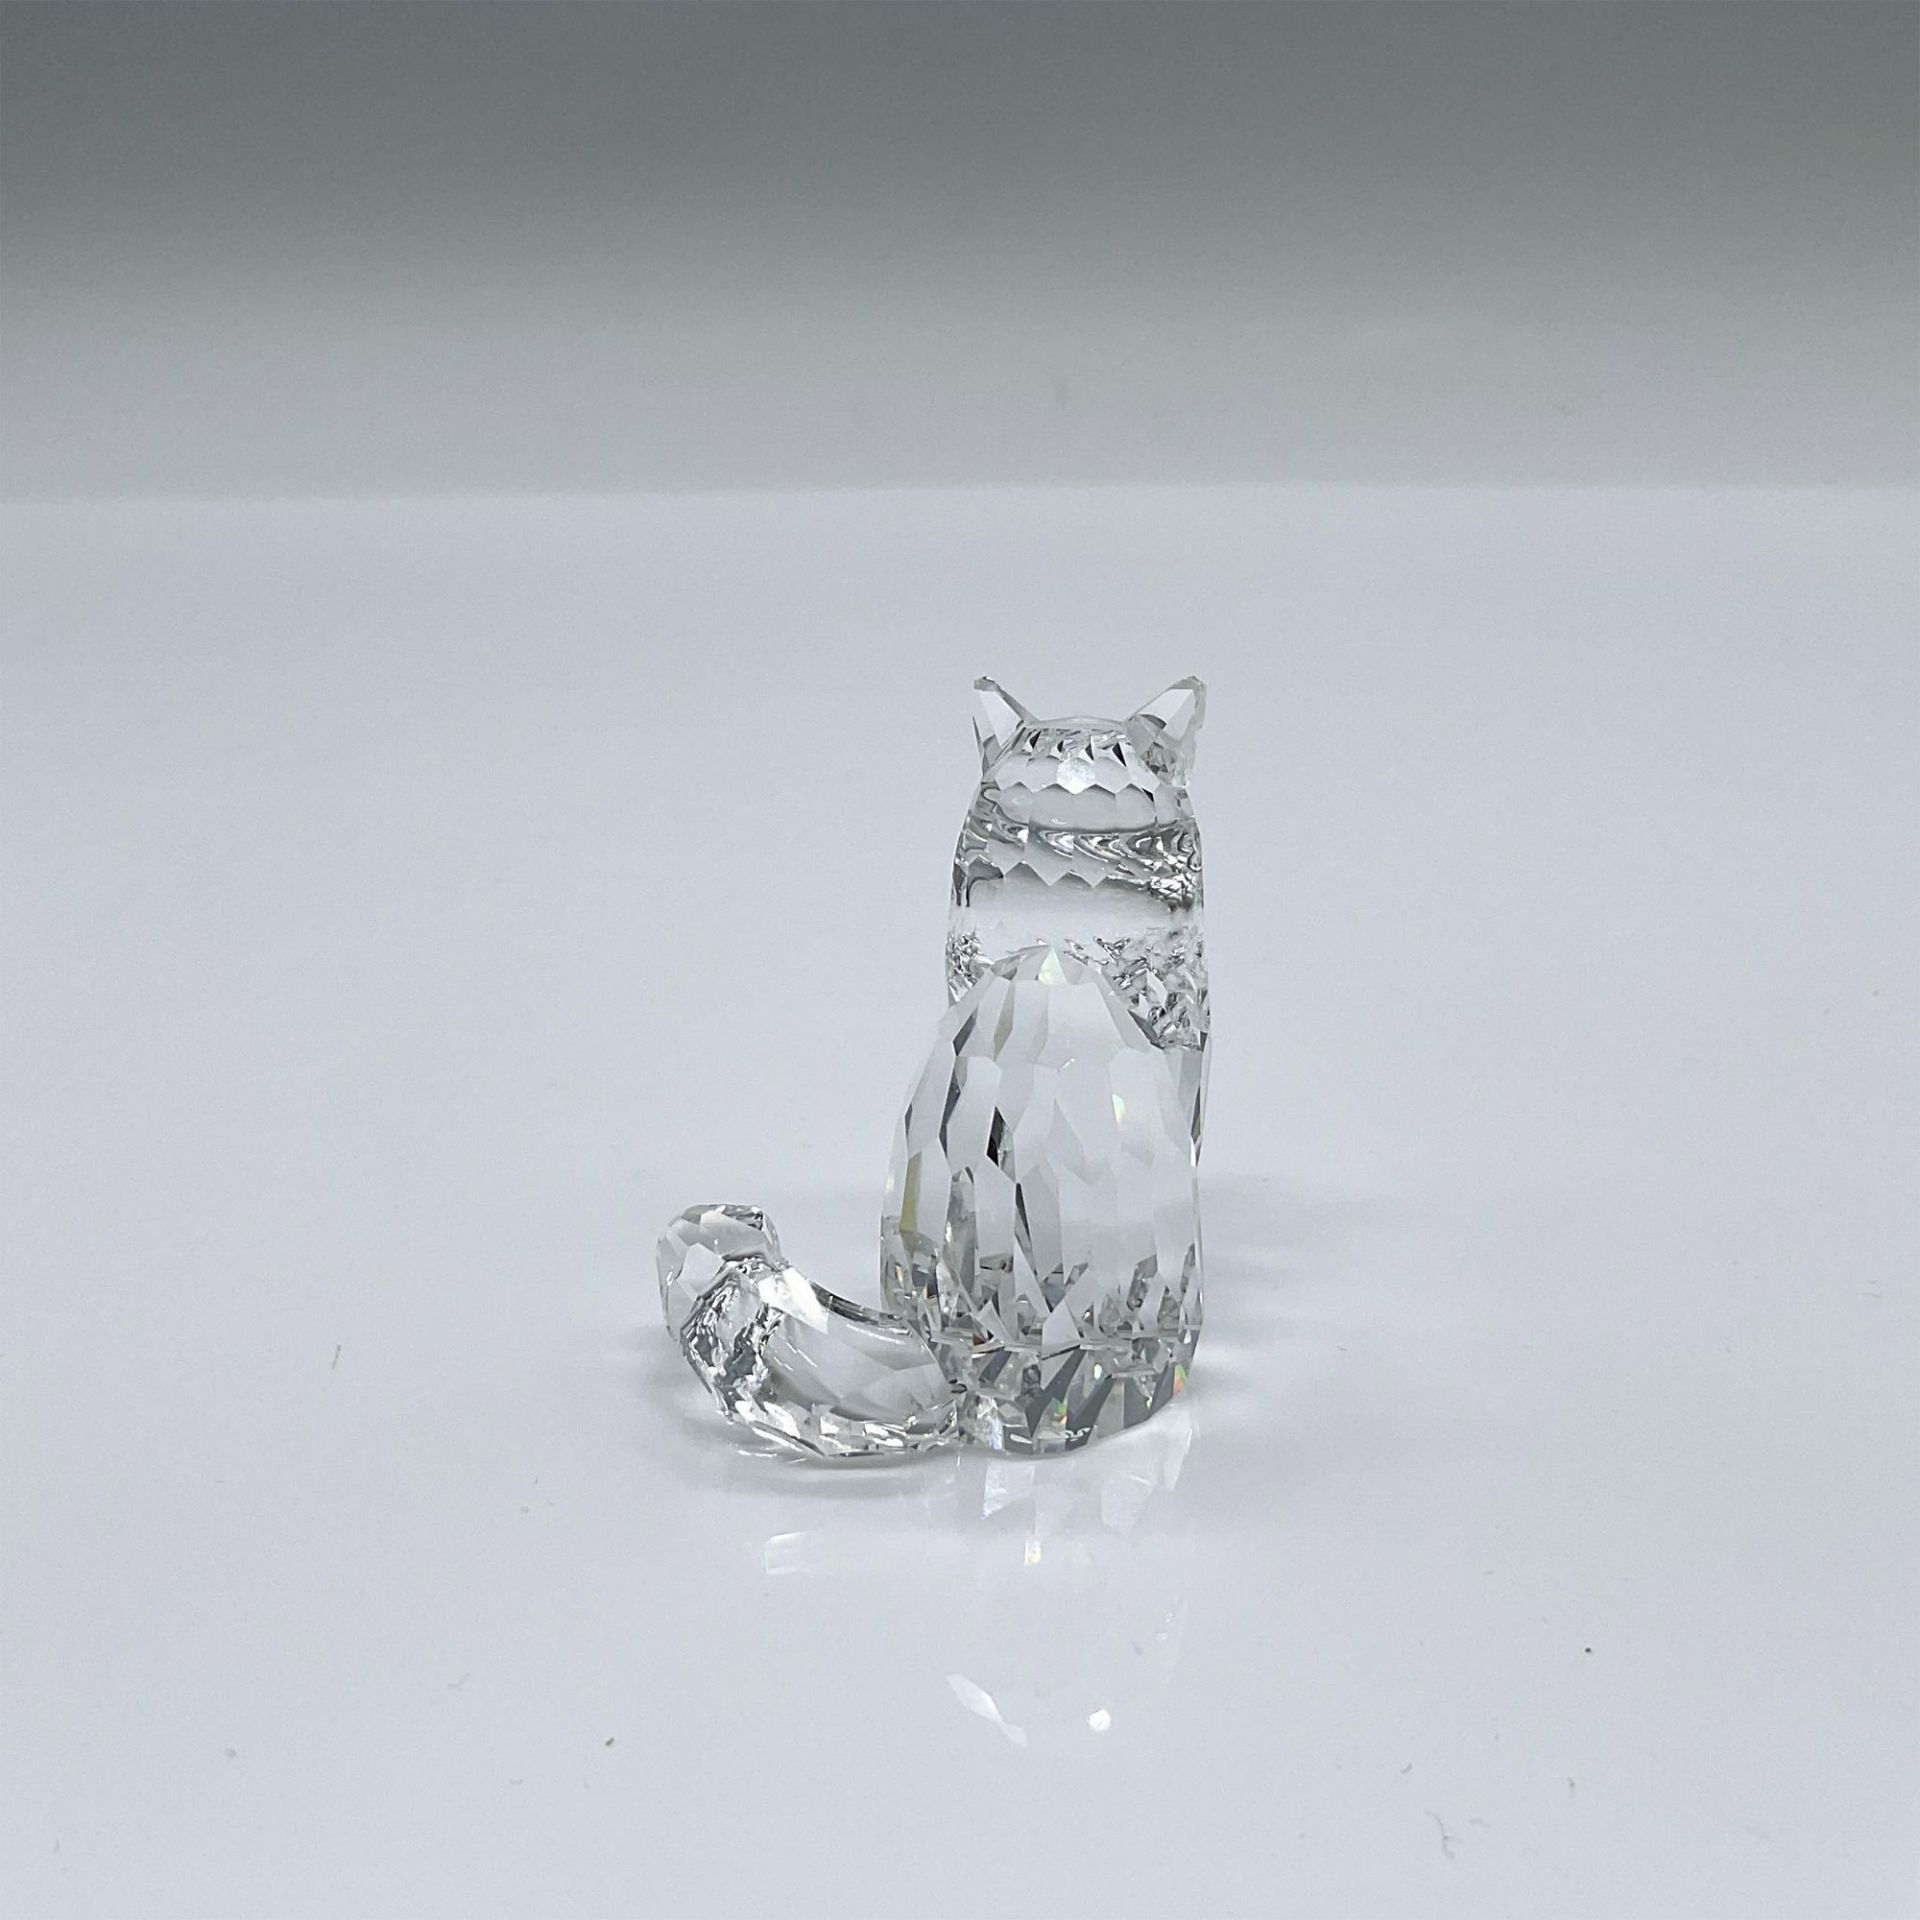 Swarovski Crystal Figurine, Cat Sitting - Image 2 of 3